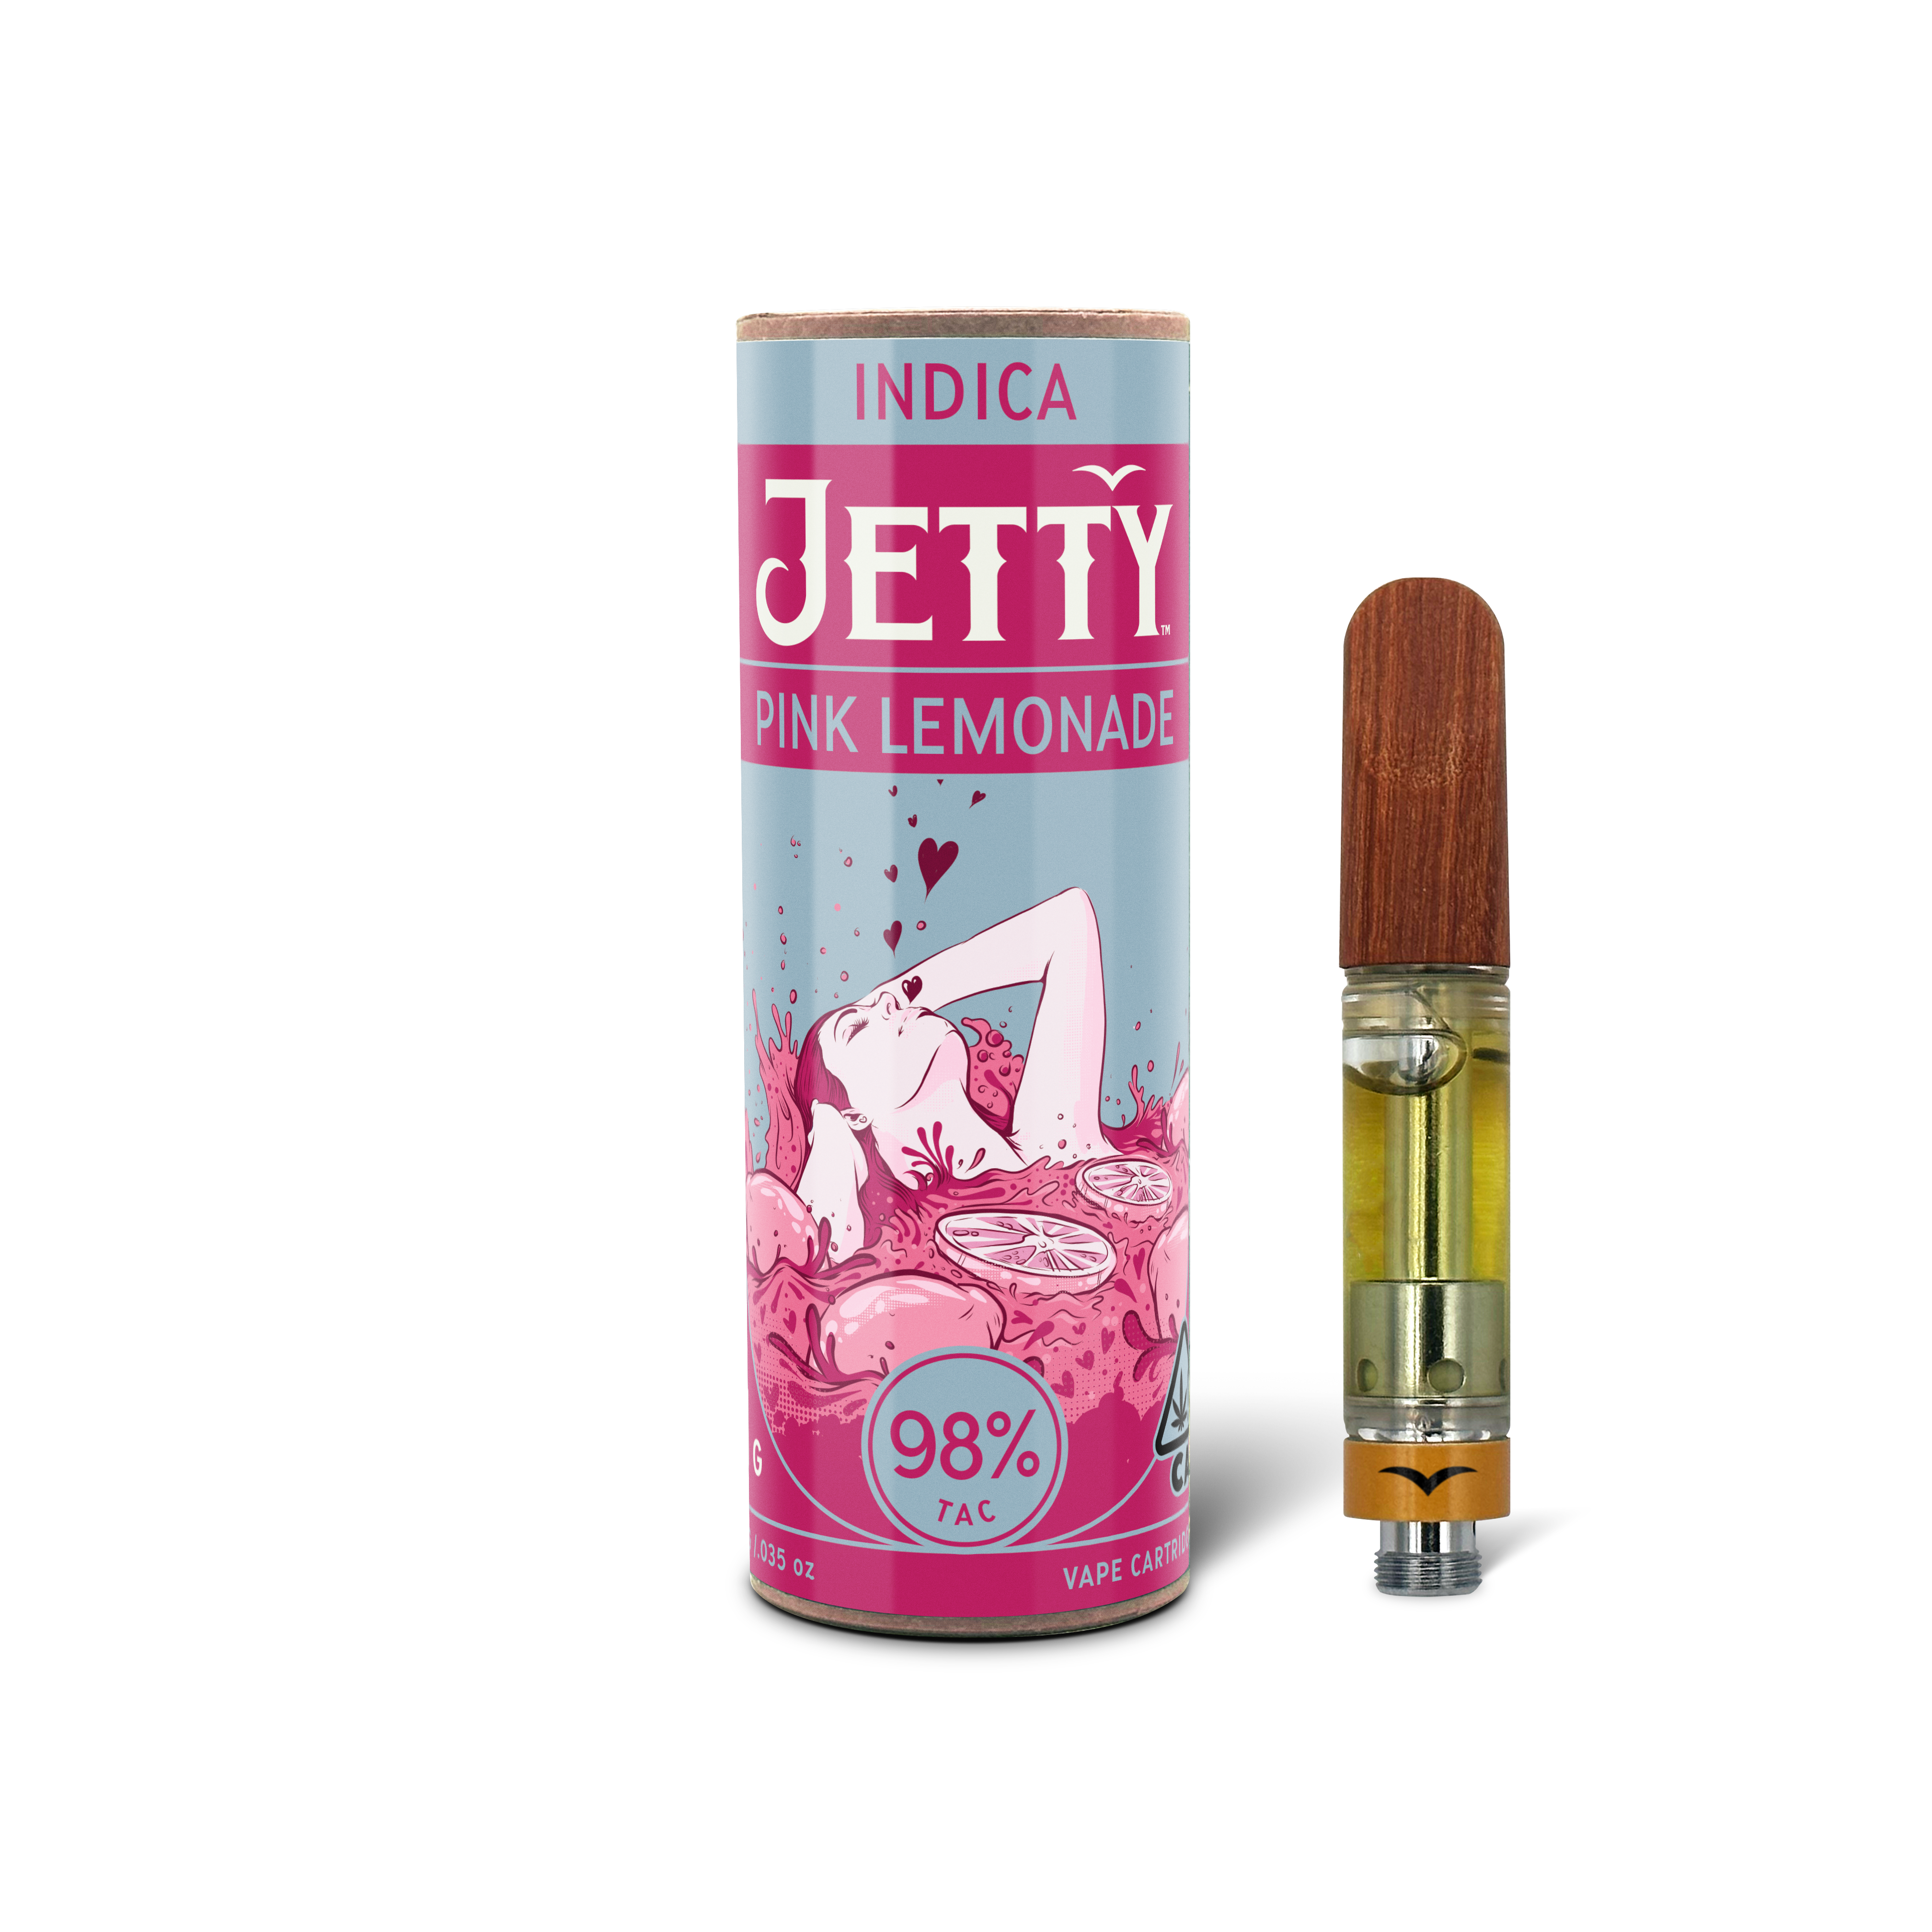 A photograph of Jetty Cartridge 1g Pink Lemonade